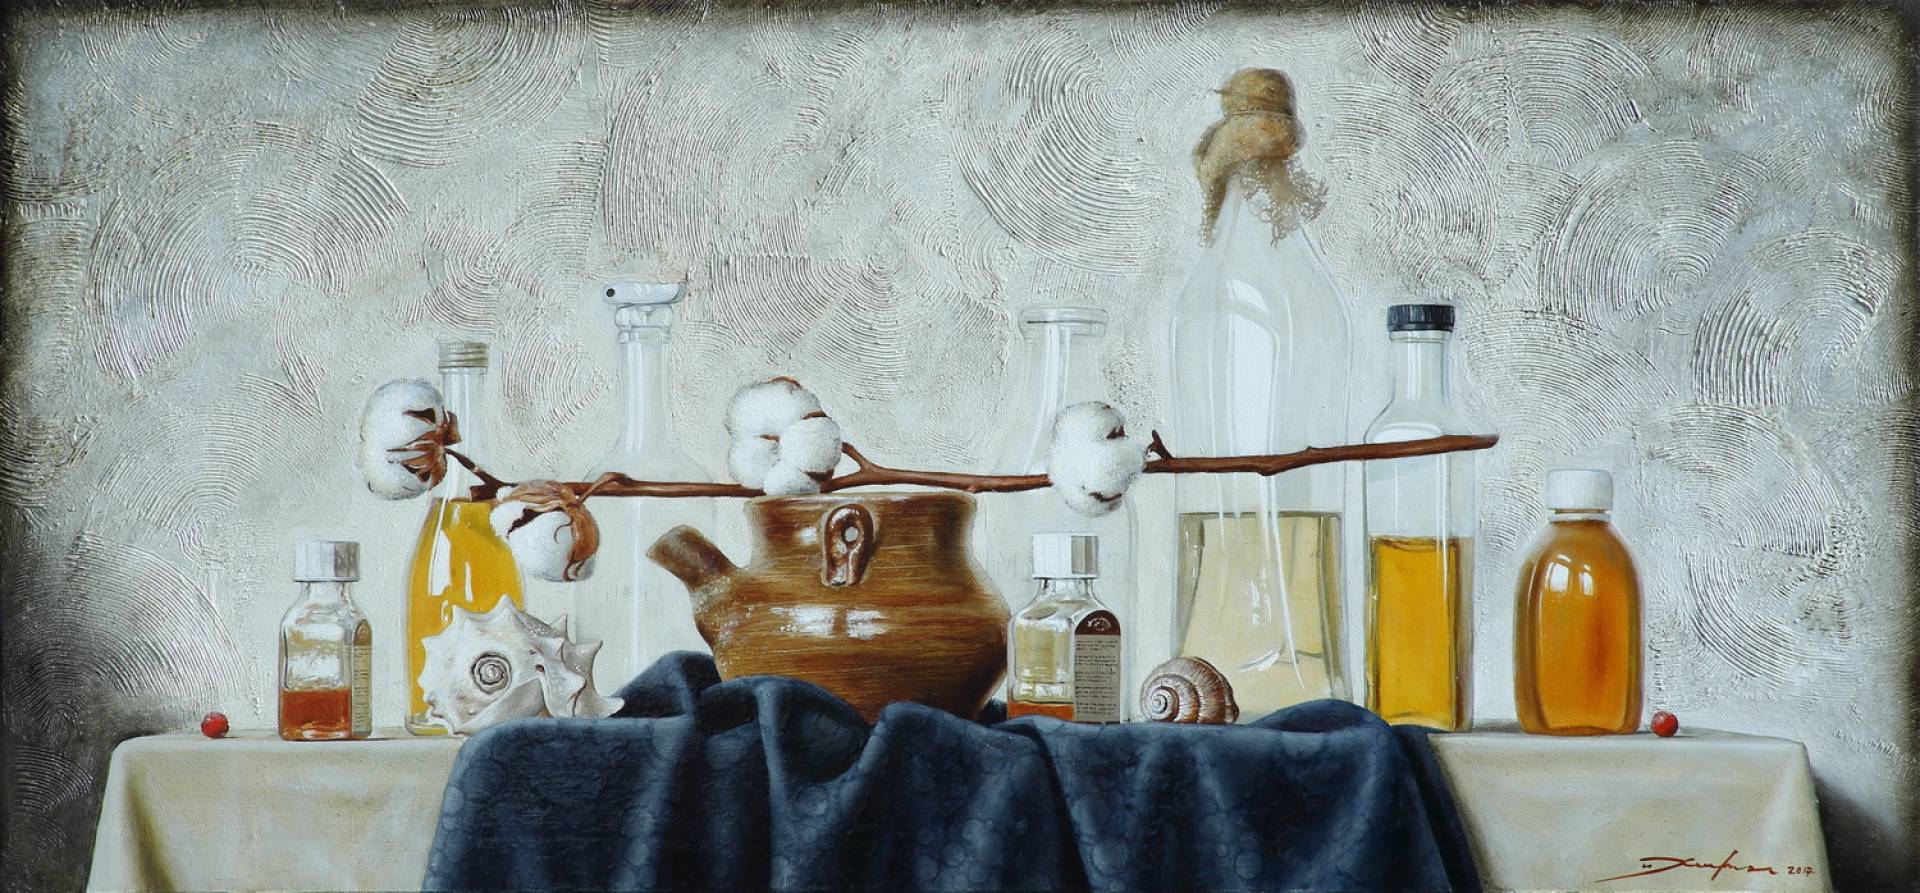 Cotton Oil - 1, Ilya Khokhrin, Buy the painting Oil